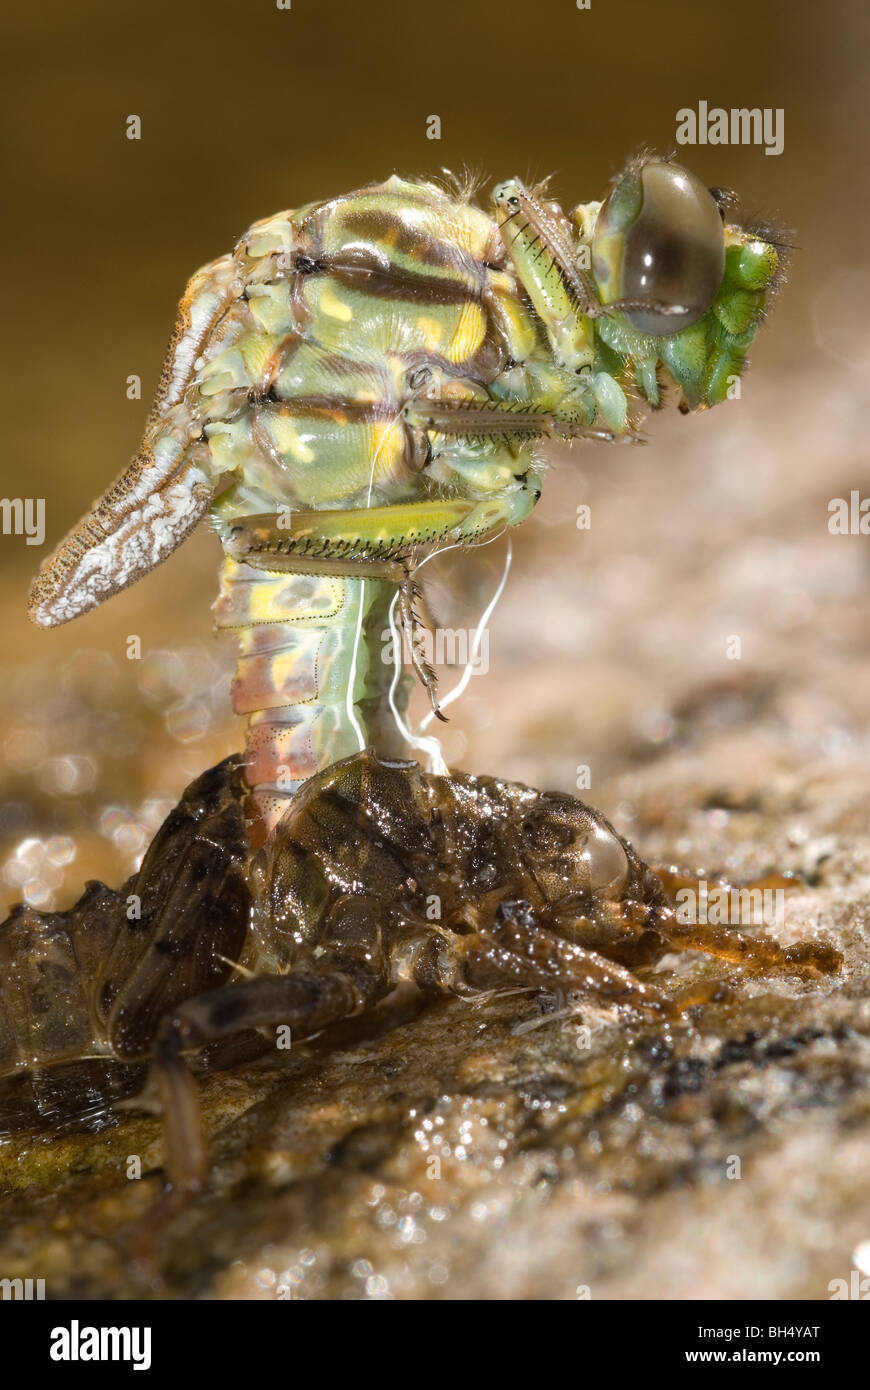 La metamorfosis de la libélula pincertail grande (Onychogomphus uncatus) Foto de stock